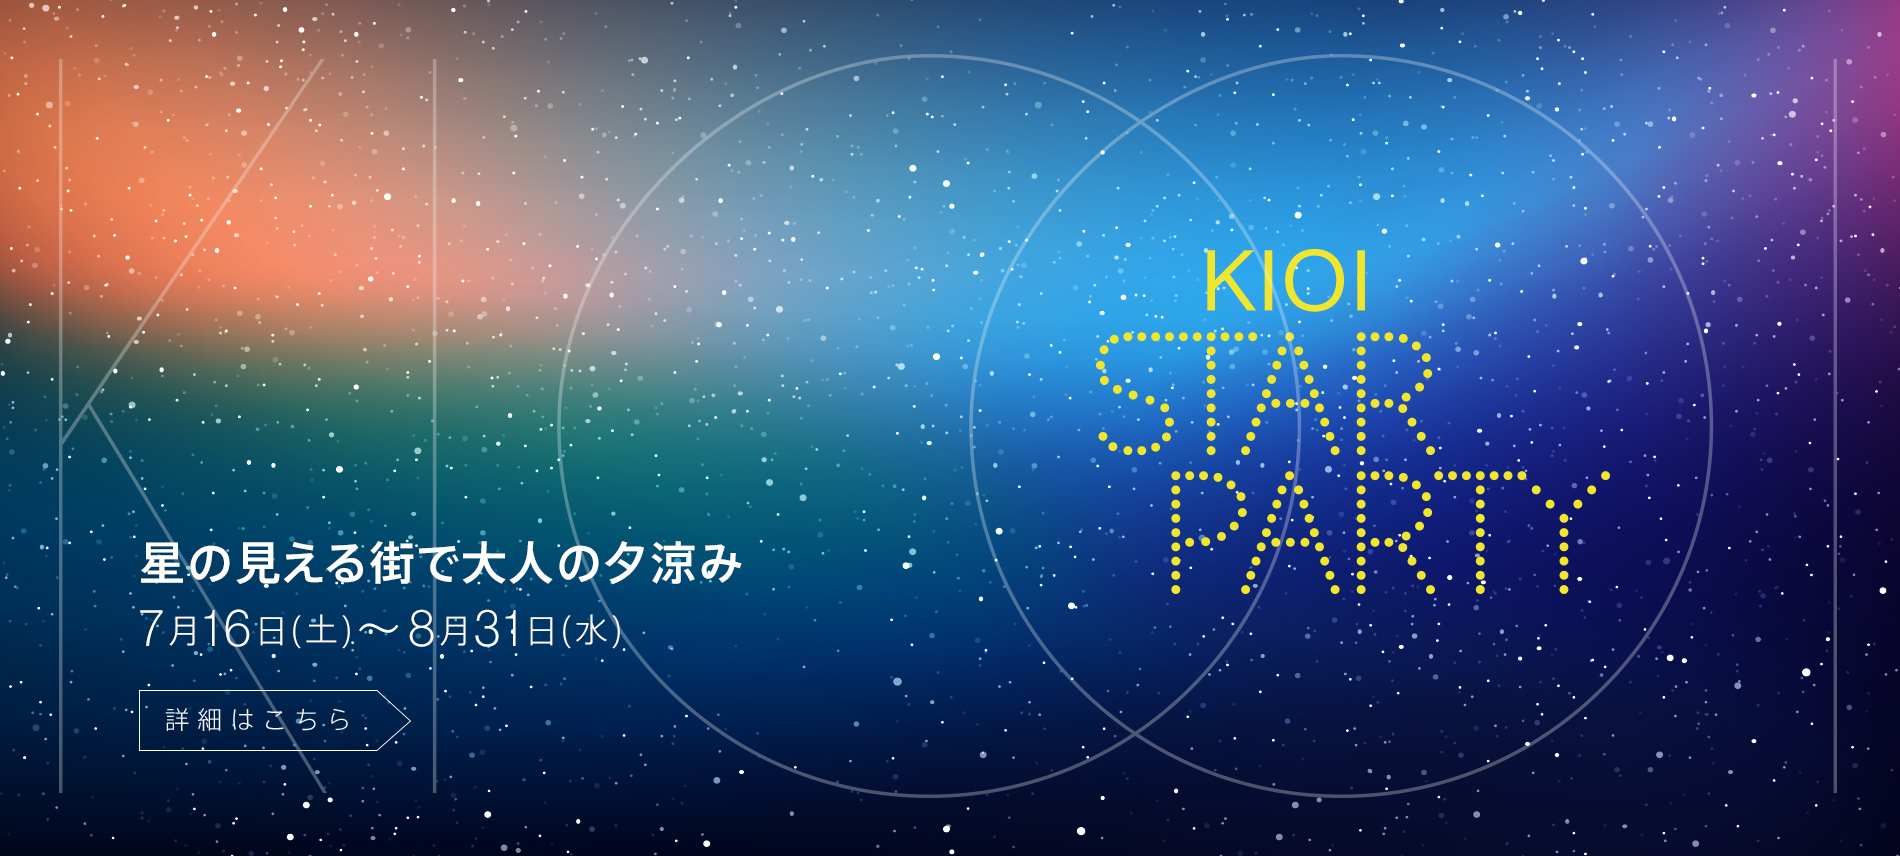 KIOI STAR PARTY